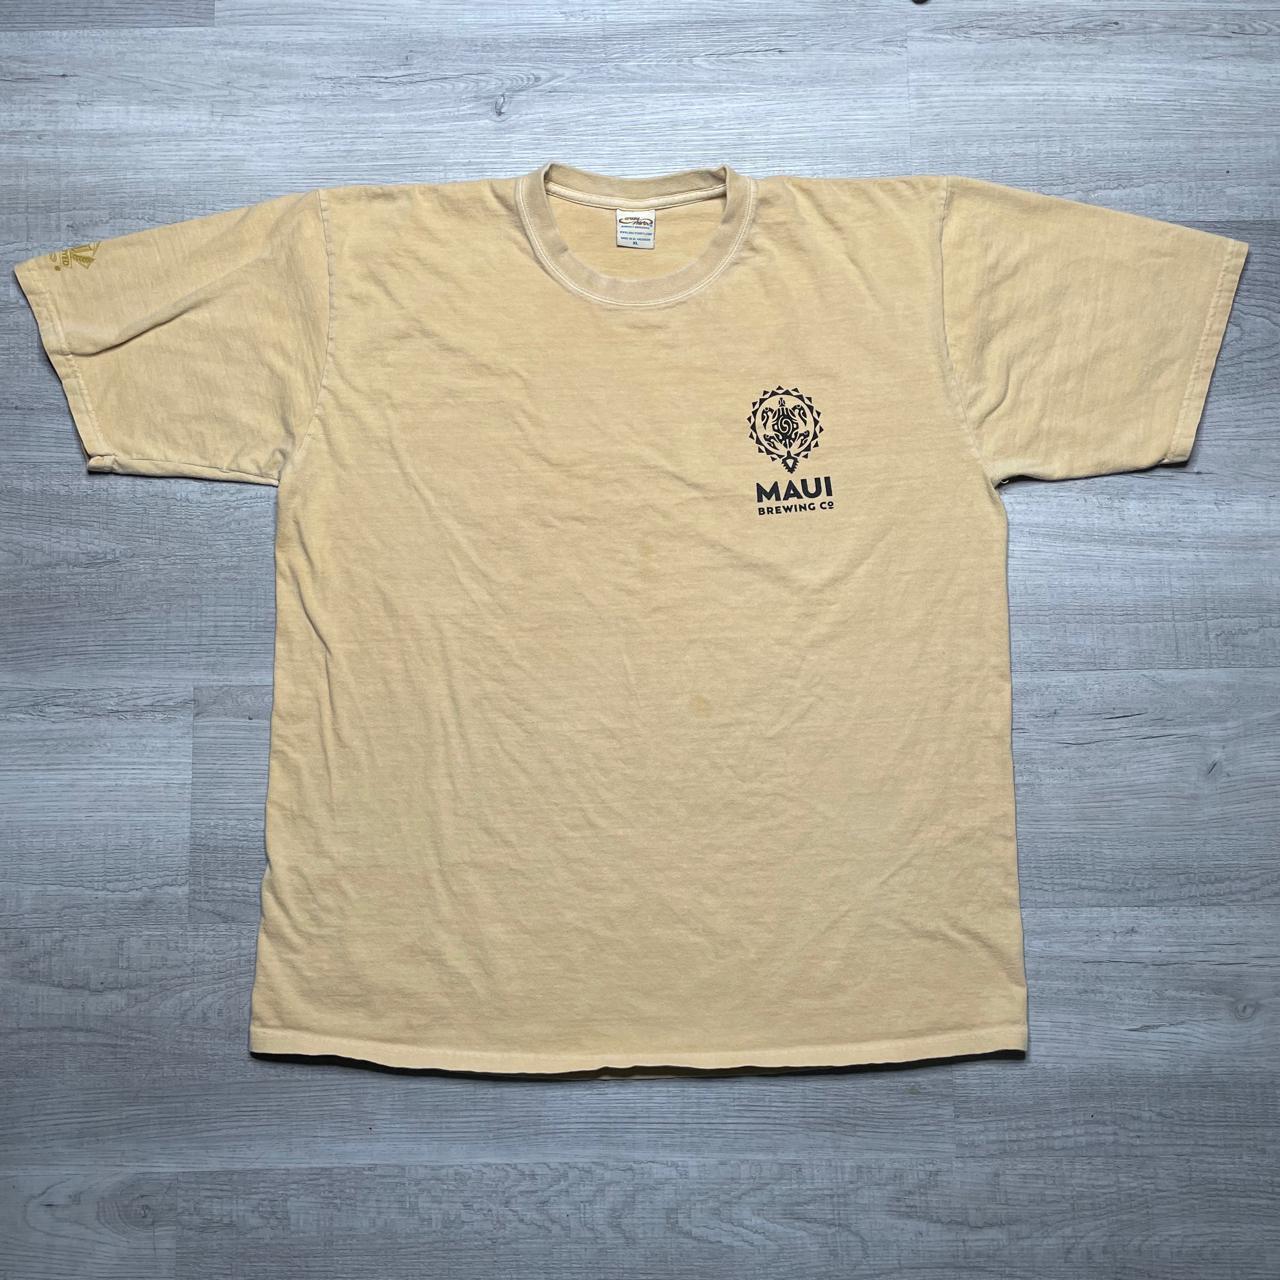 maksimum Tilbageholde solnedgang Crazy Shirts Men's Cream T-shirt | Depop